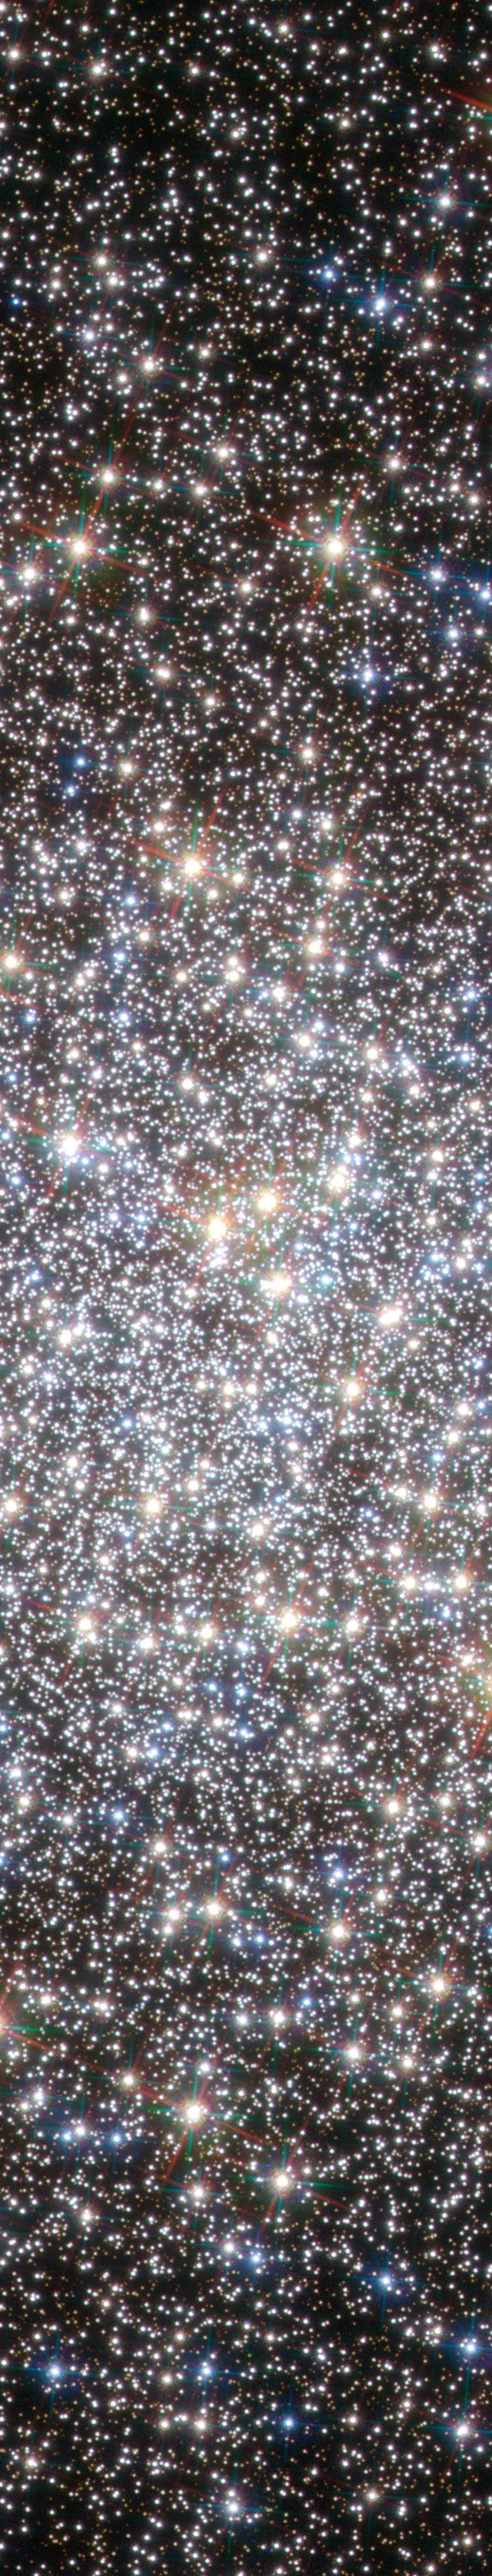 Image credit: ESA / Hubble & NASA.